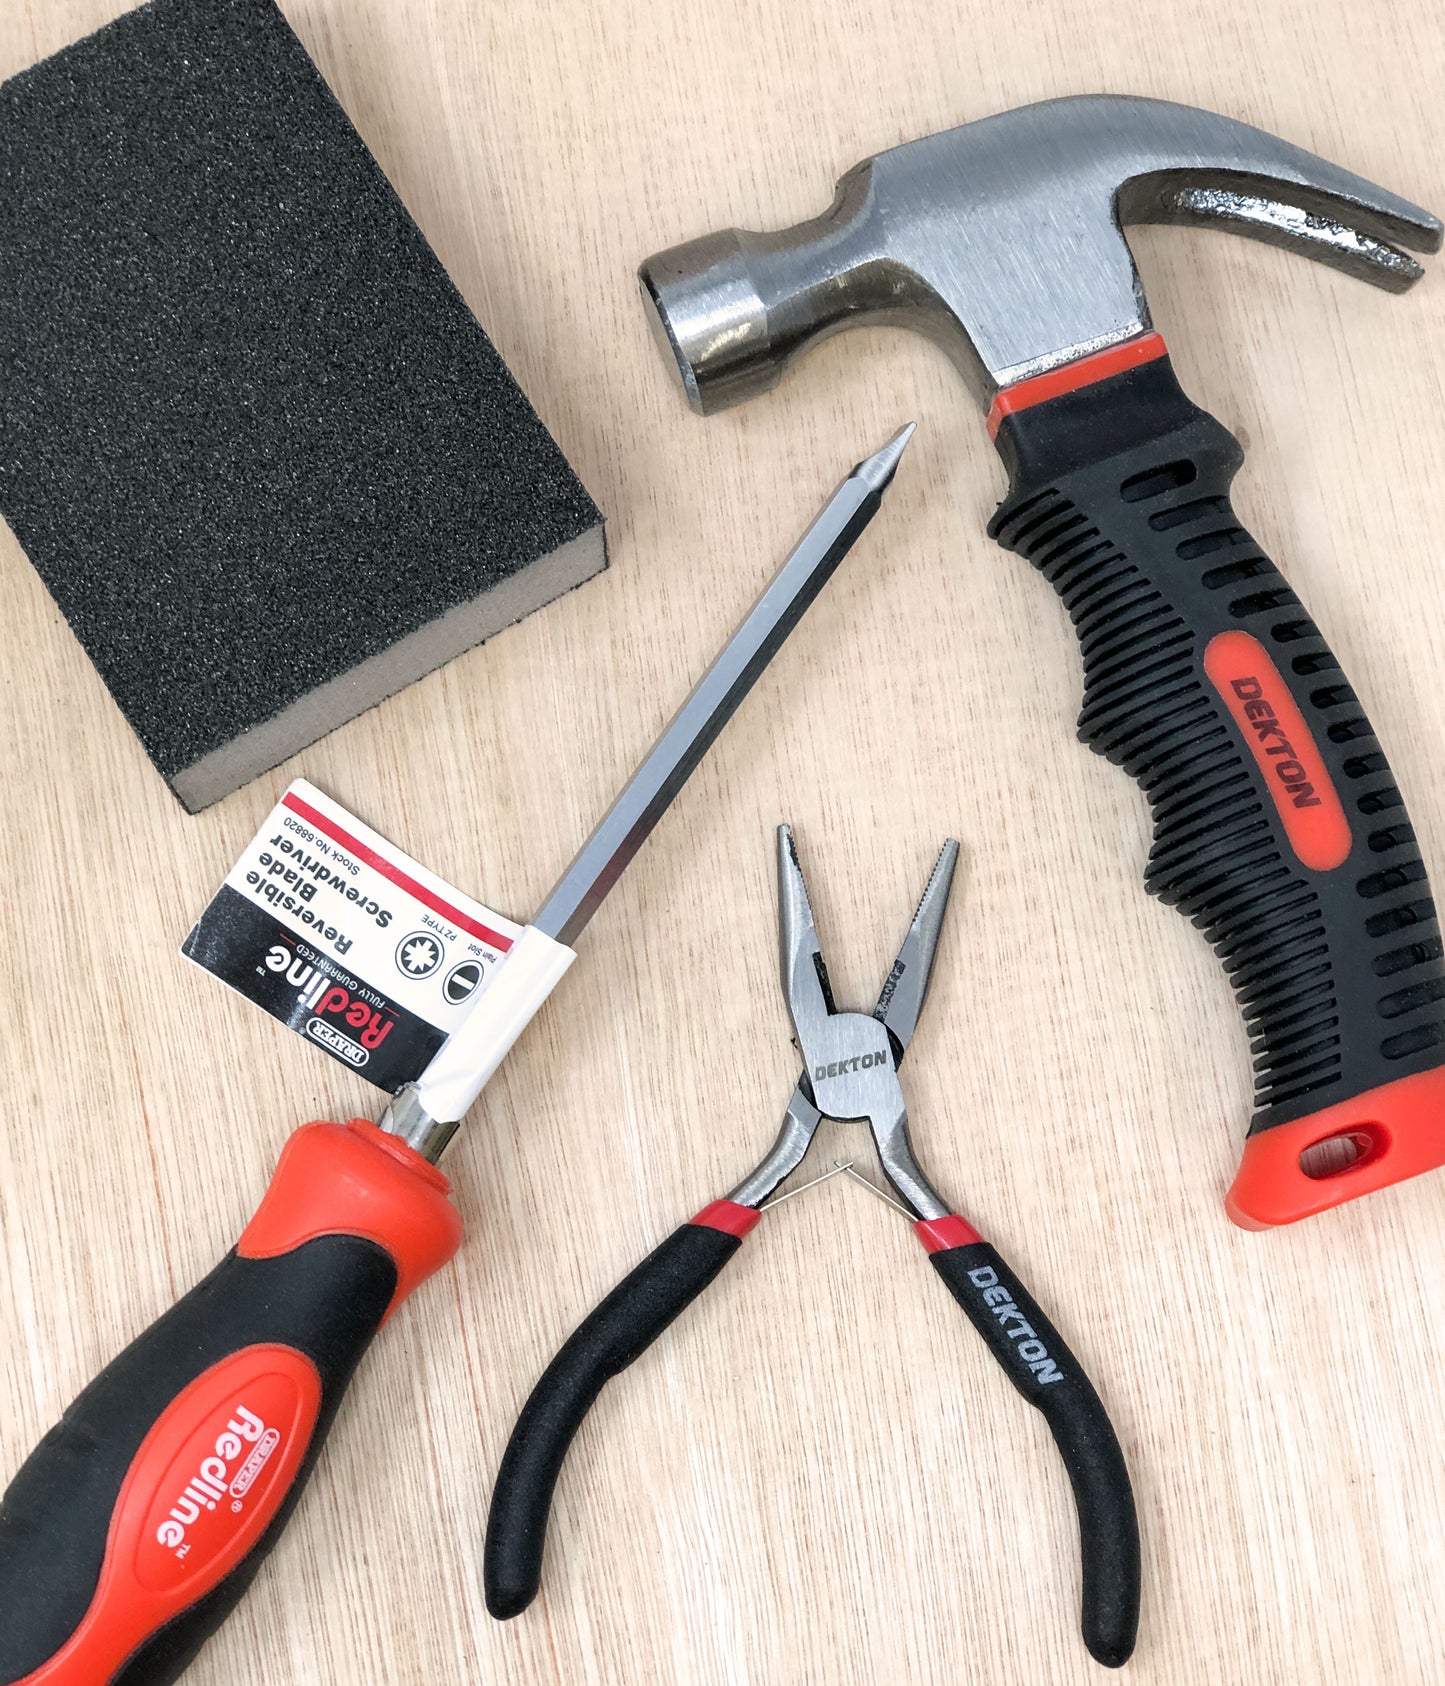 Essential Maker Tool Kit